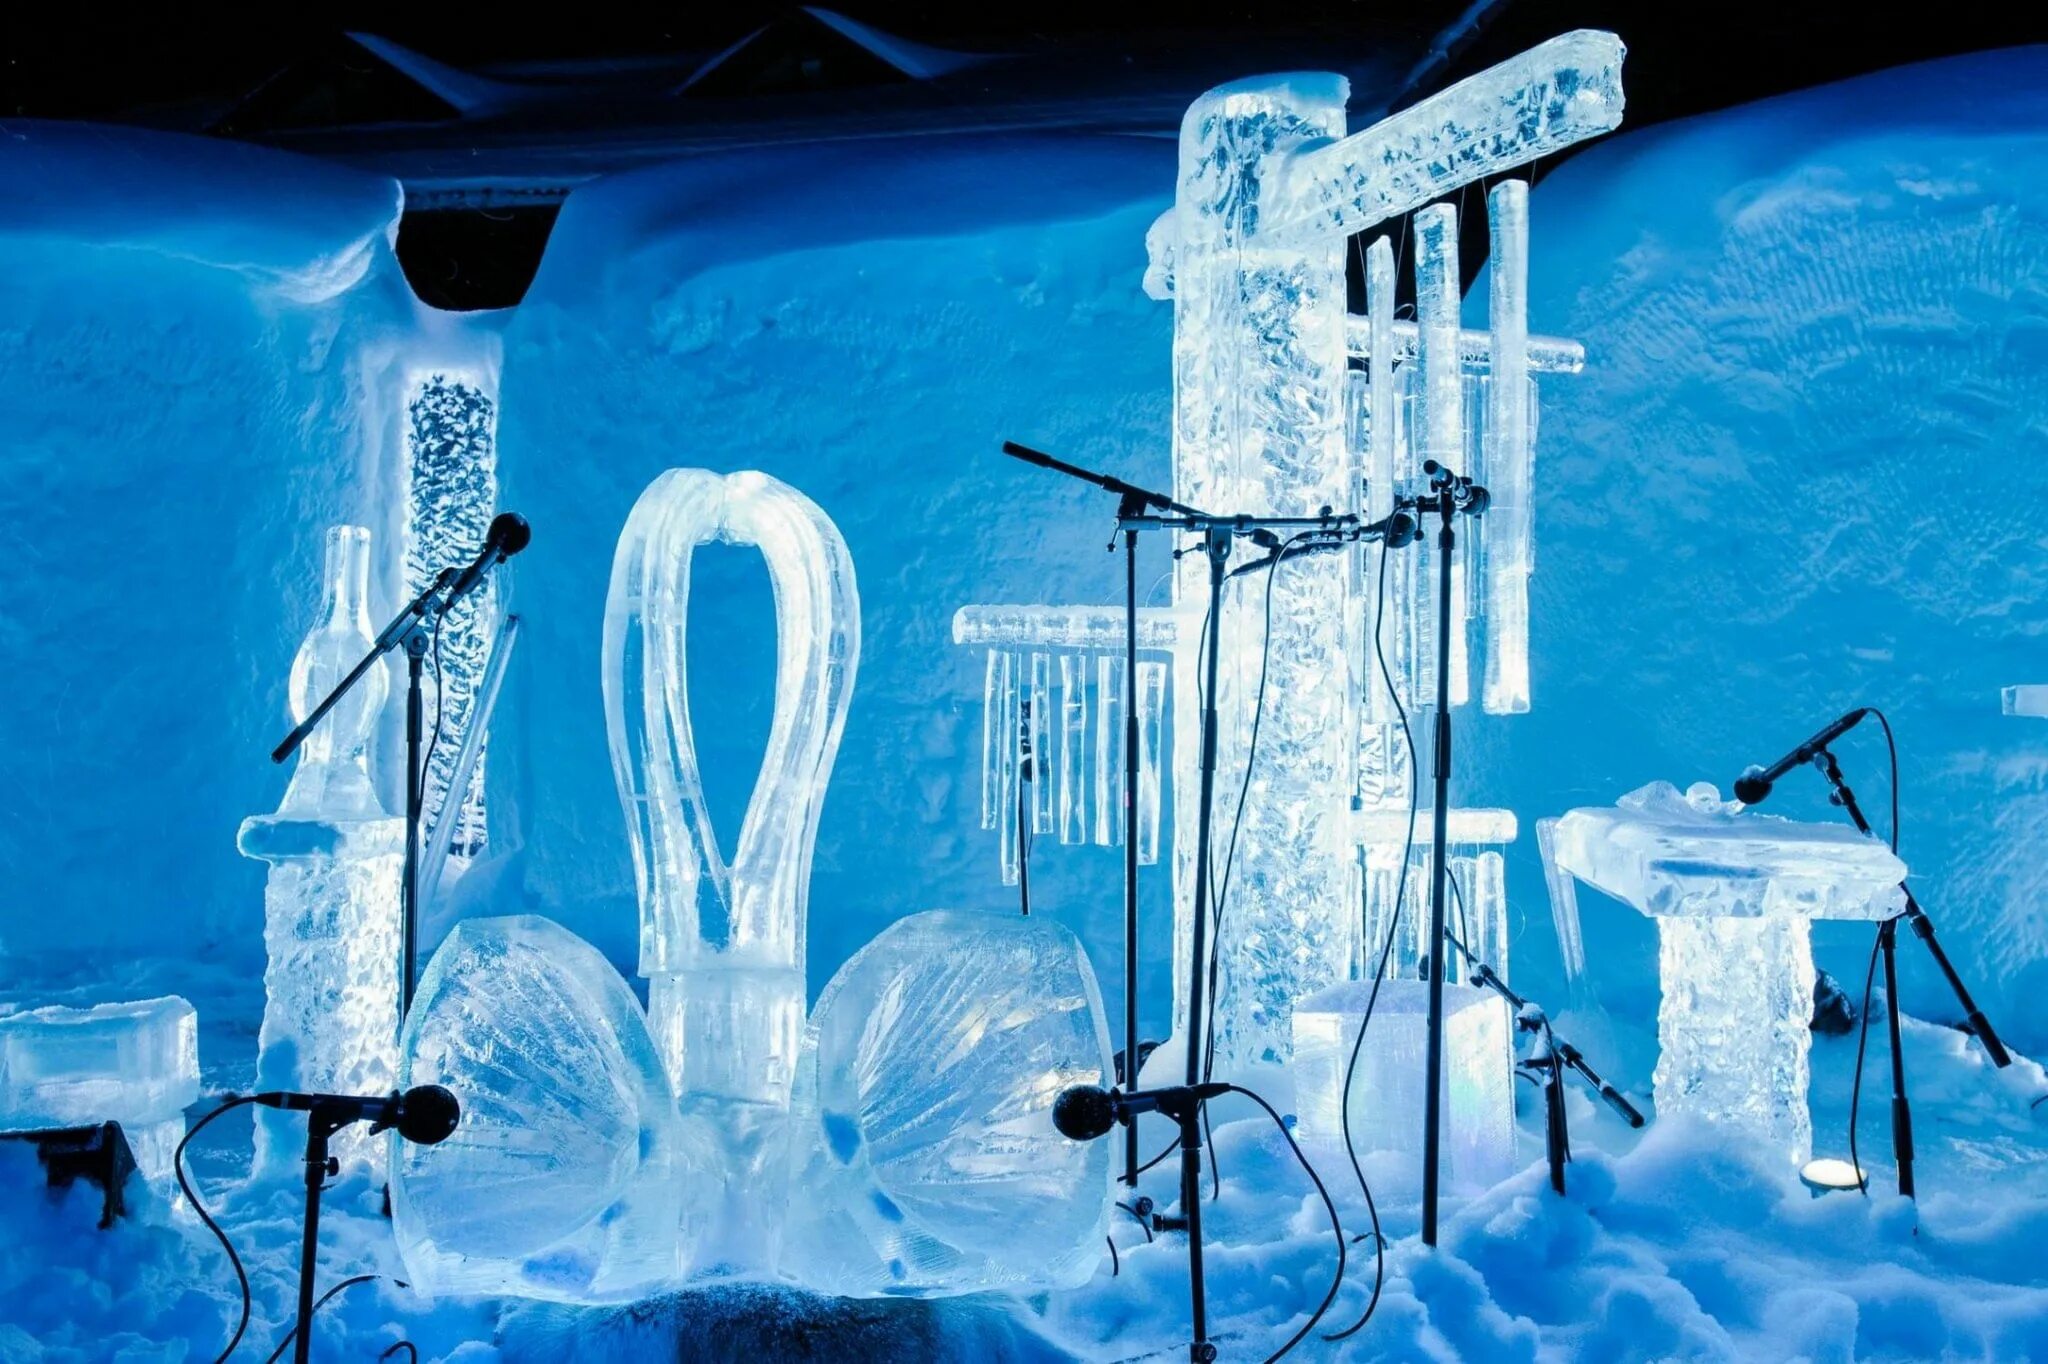 Музыка видео зима. Терье Исунгсет. Terje Isungset. Ледяные музыкальные инструменты. Музыкальные инструменты изо льда.